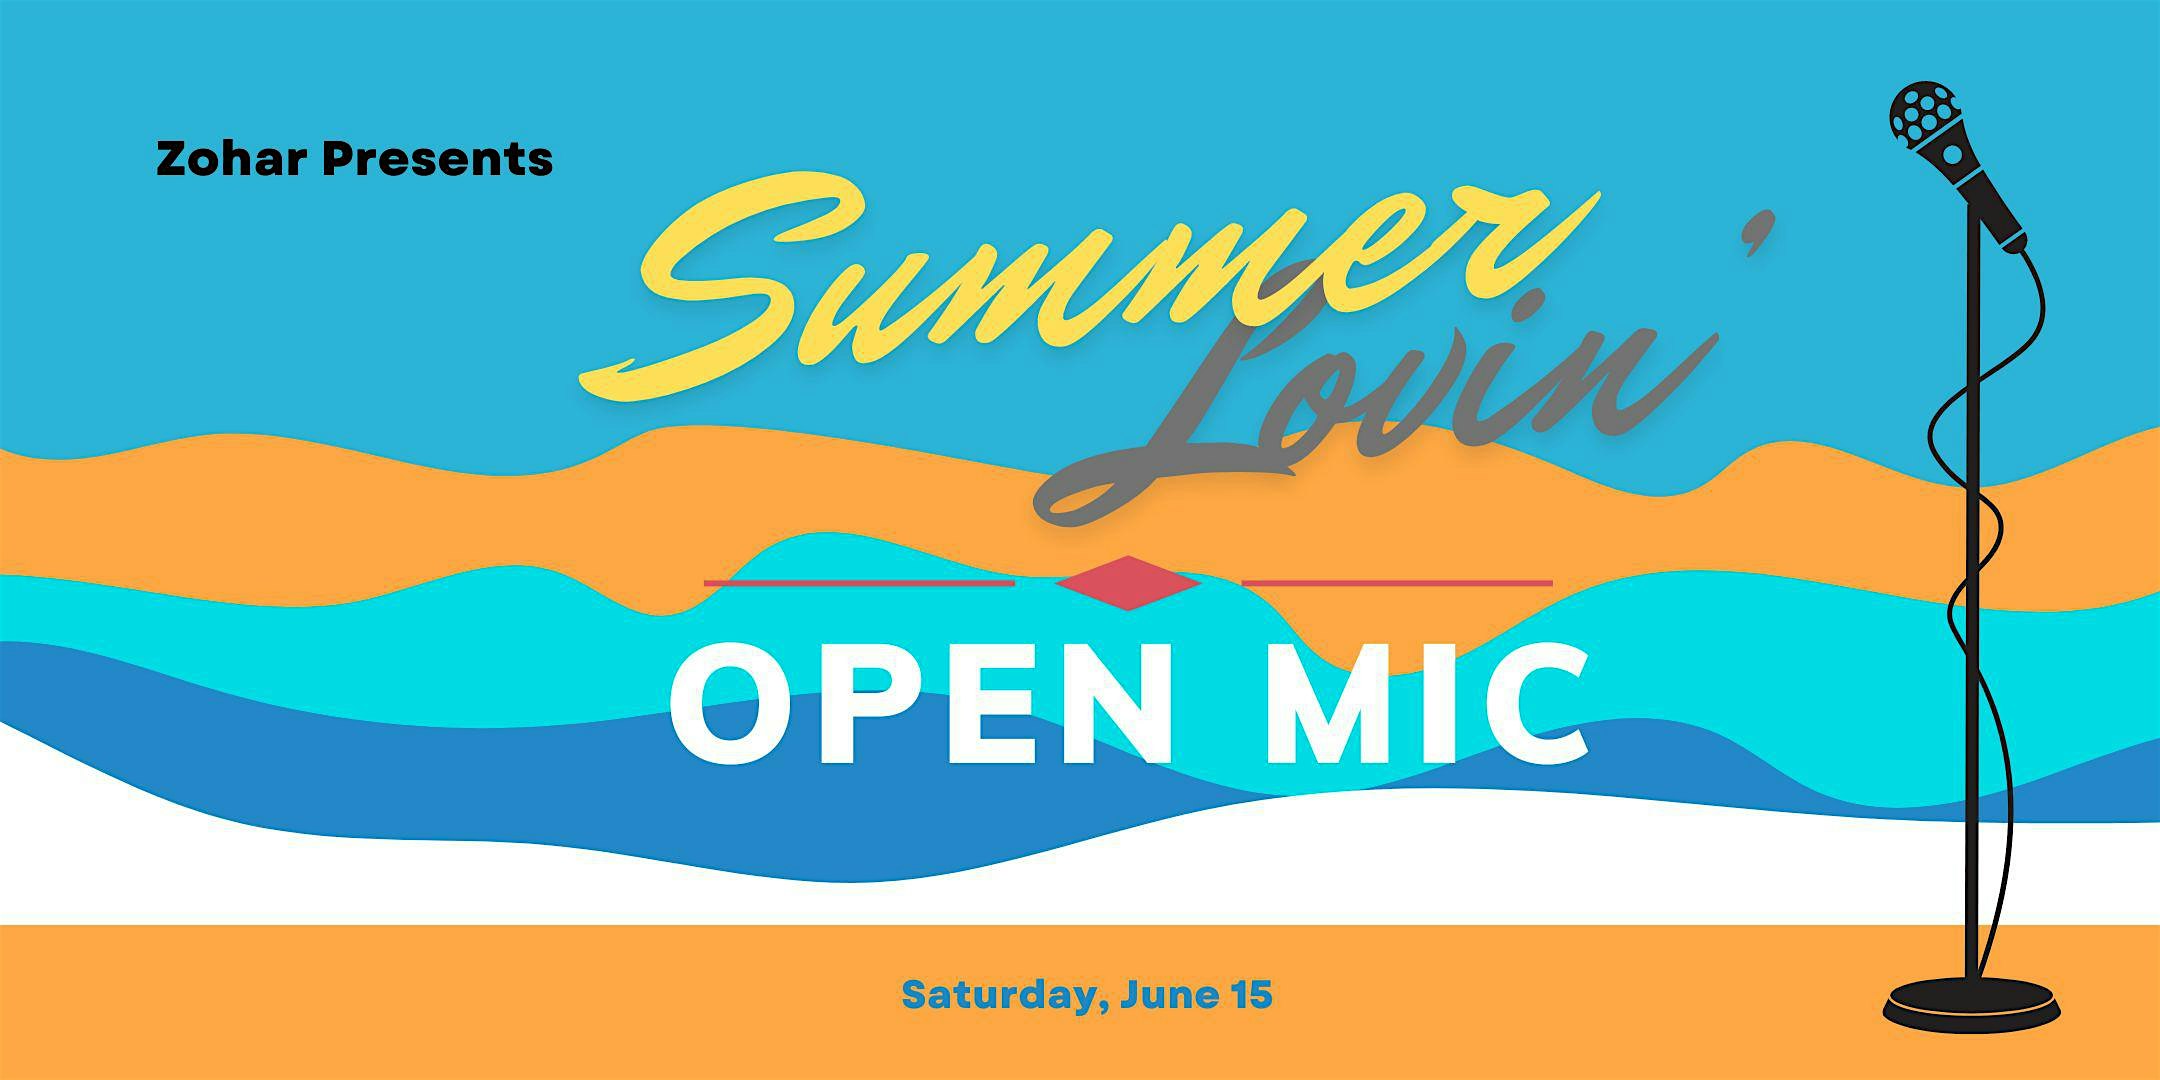 Open Mic - Summer Lovin'